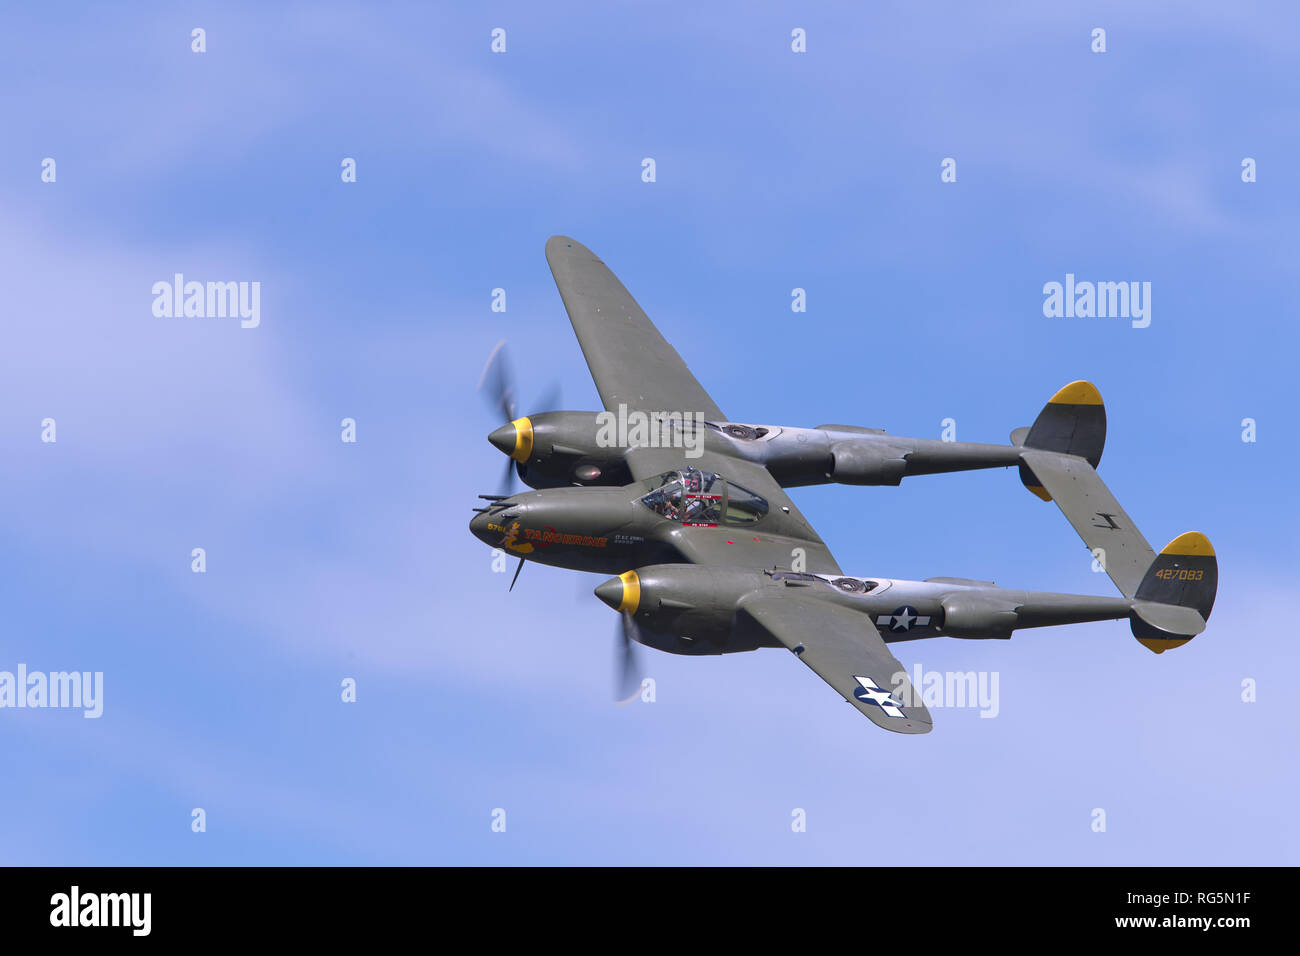 P-38 Lightning World War 2 WWII fighter in flight Stock Photo